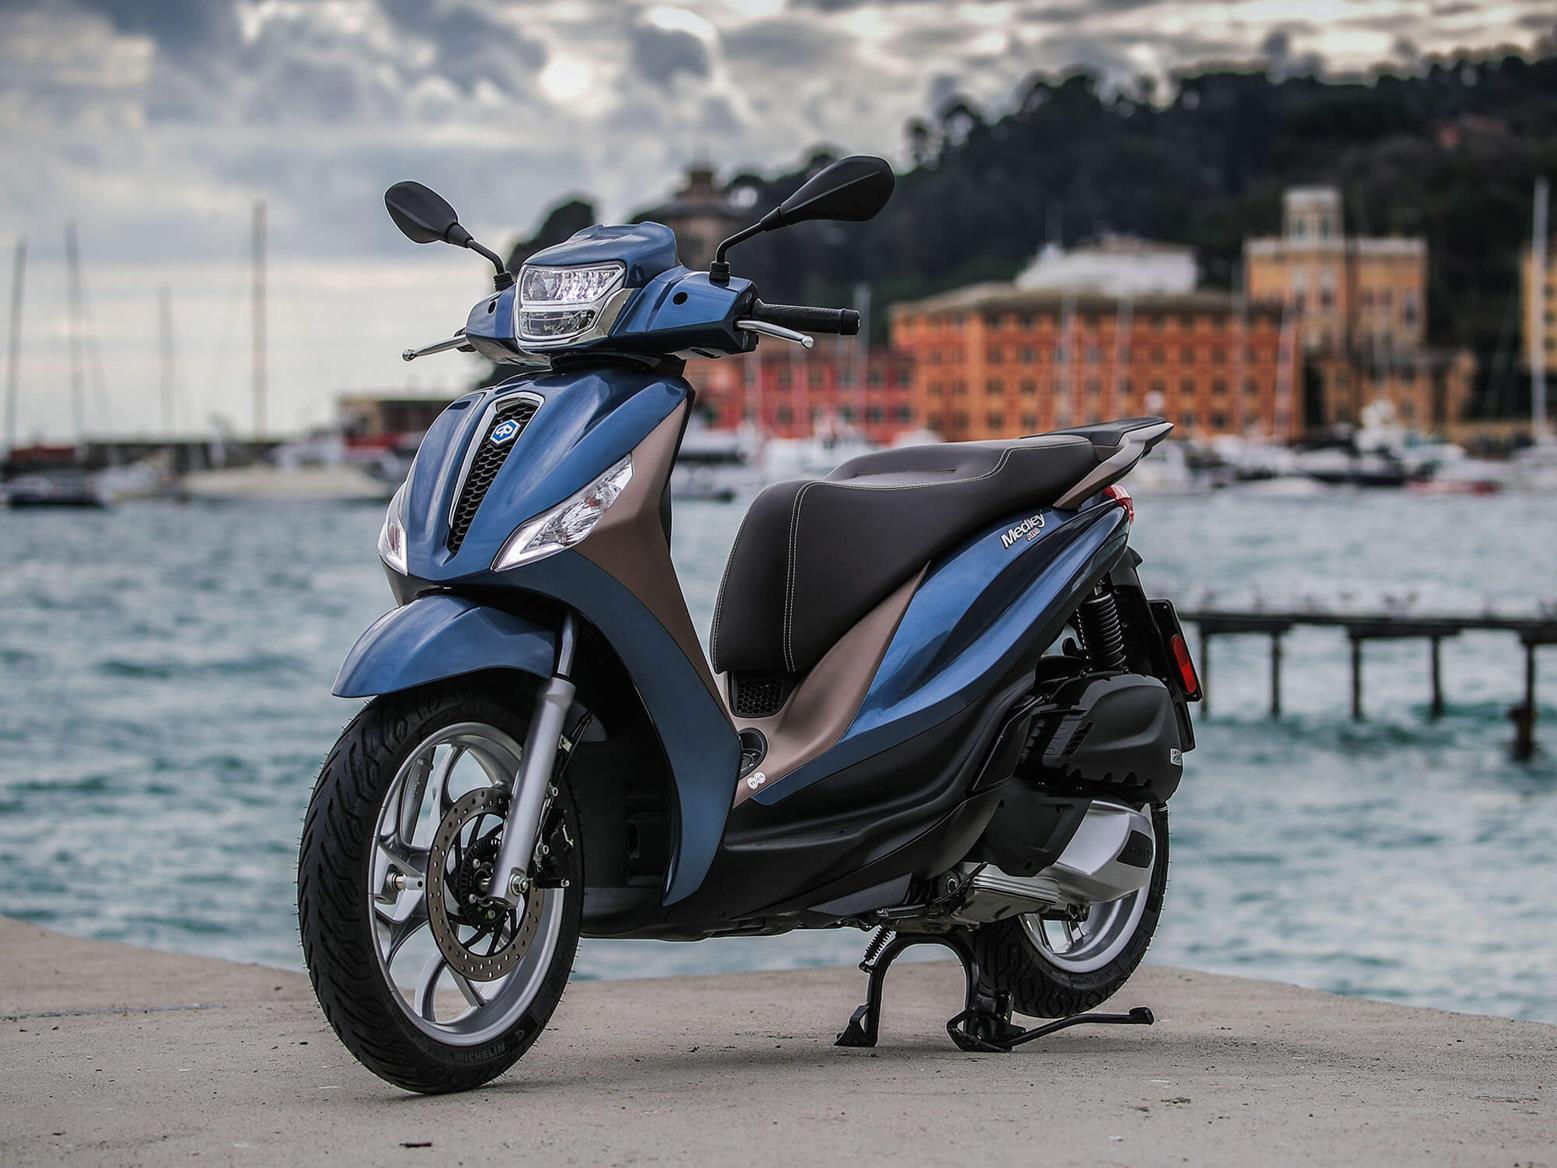 overskud pumpe Folde Medley maker: Piaggio updates 125 scooter | MCN